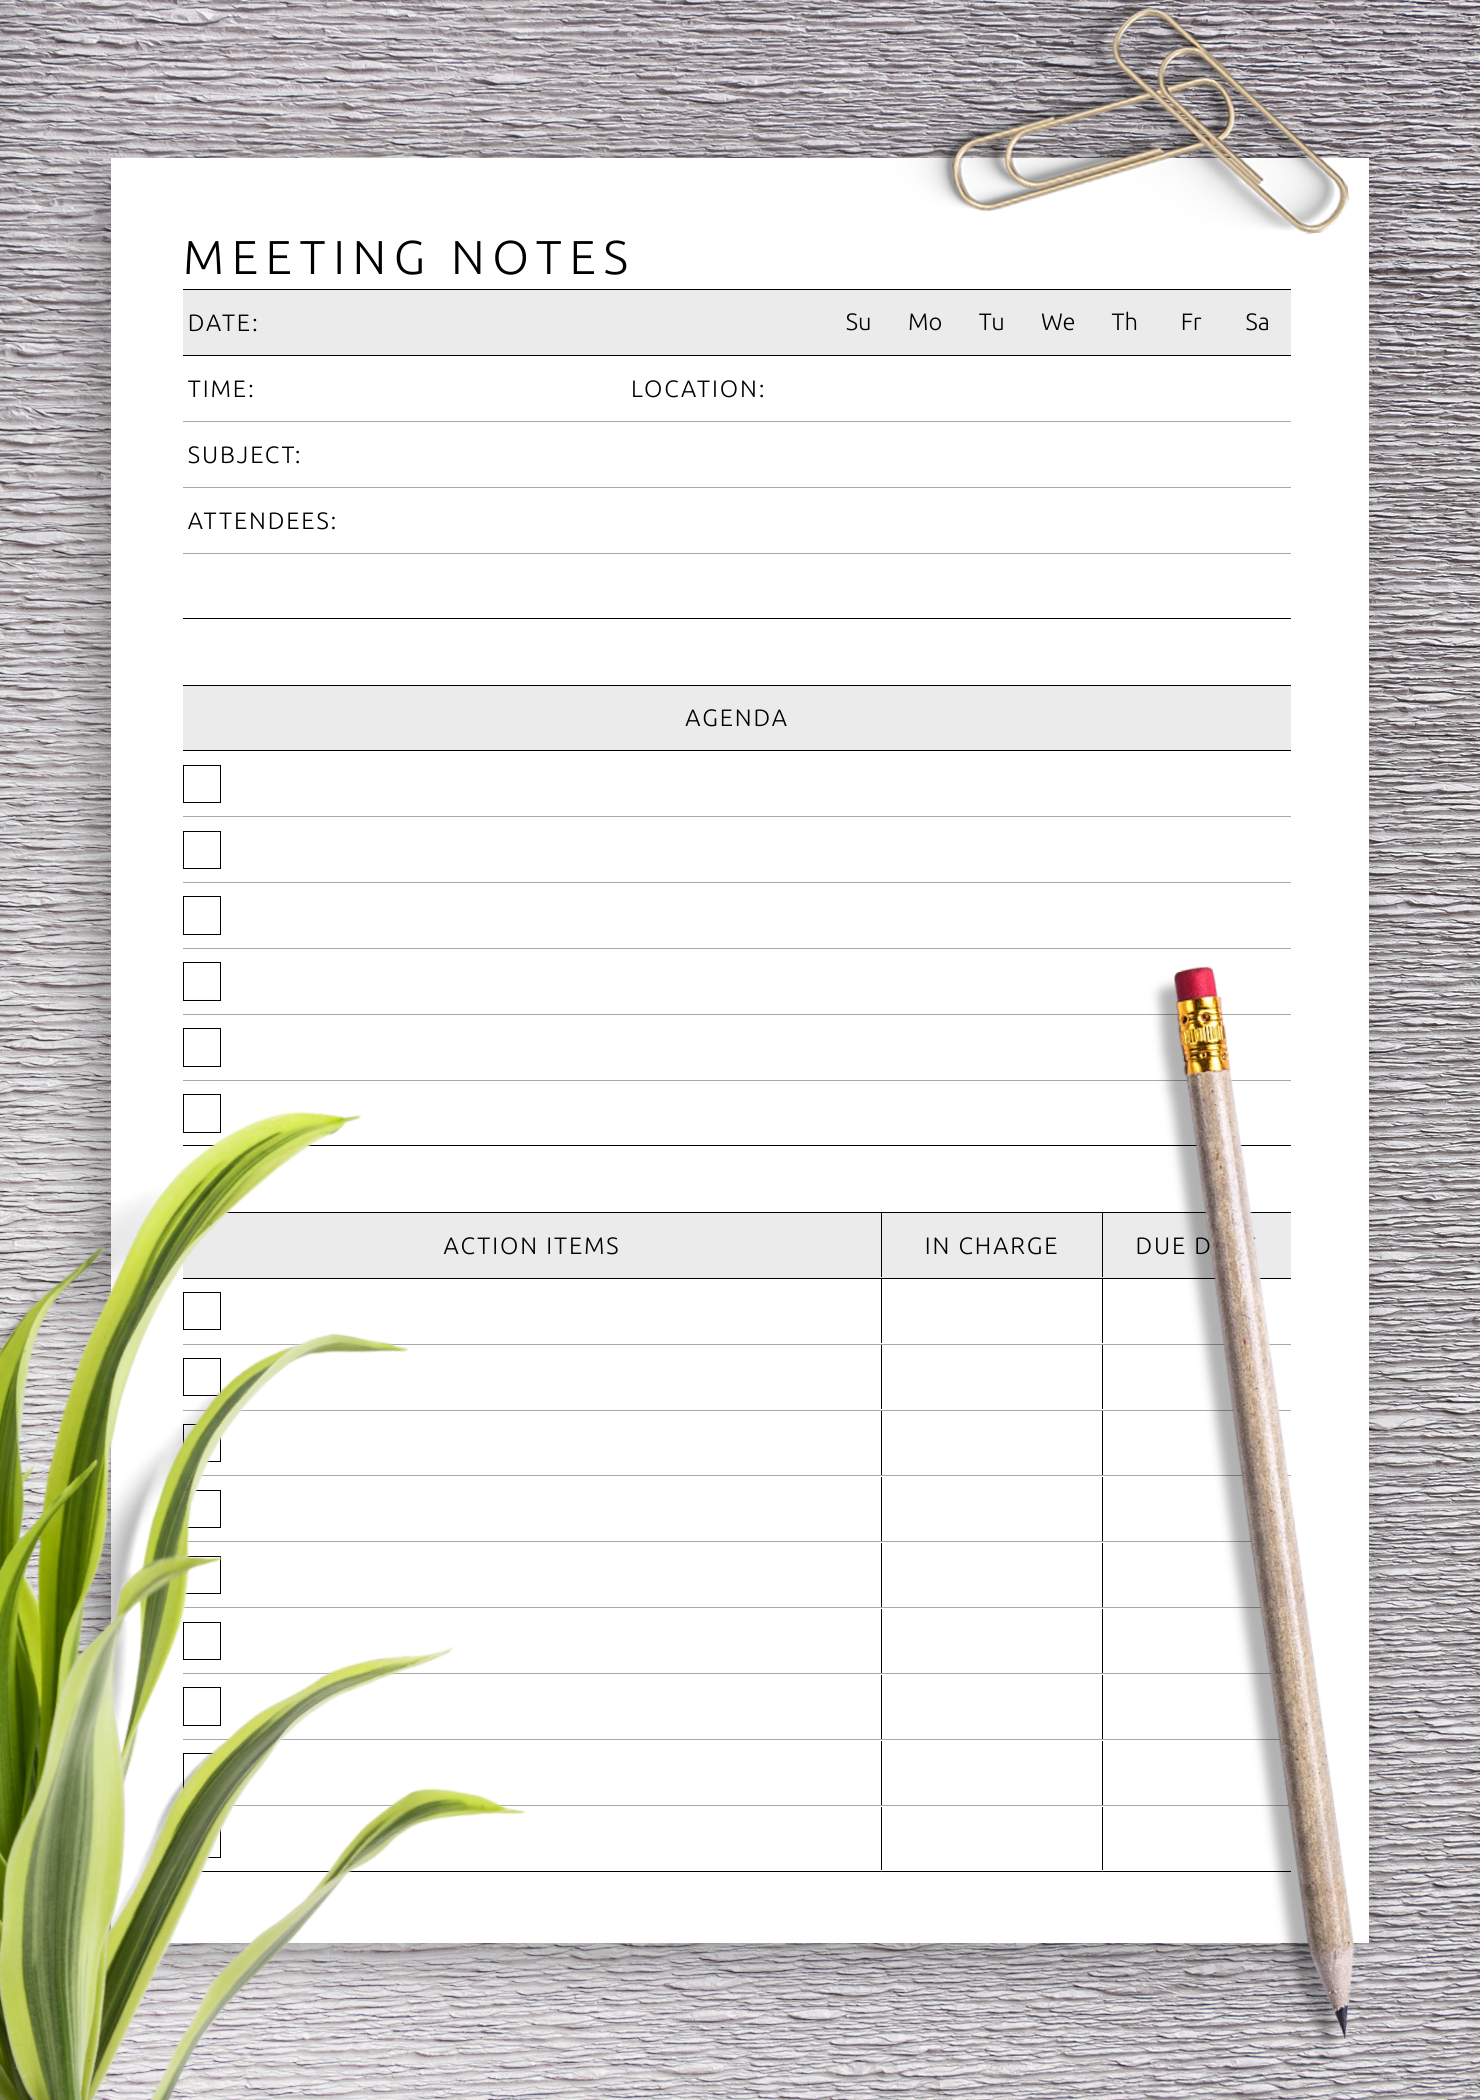 kiezen Zinloos Geboorte geven Download Printable Meeting Notes Template with Agenda and Action Items PDF